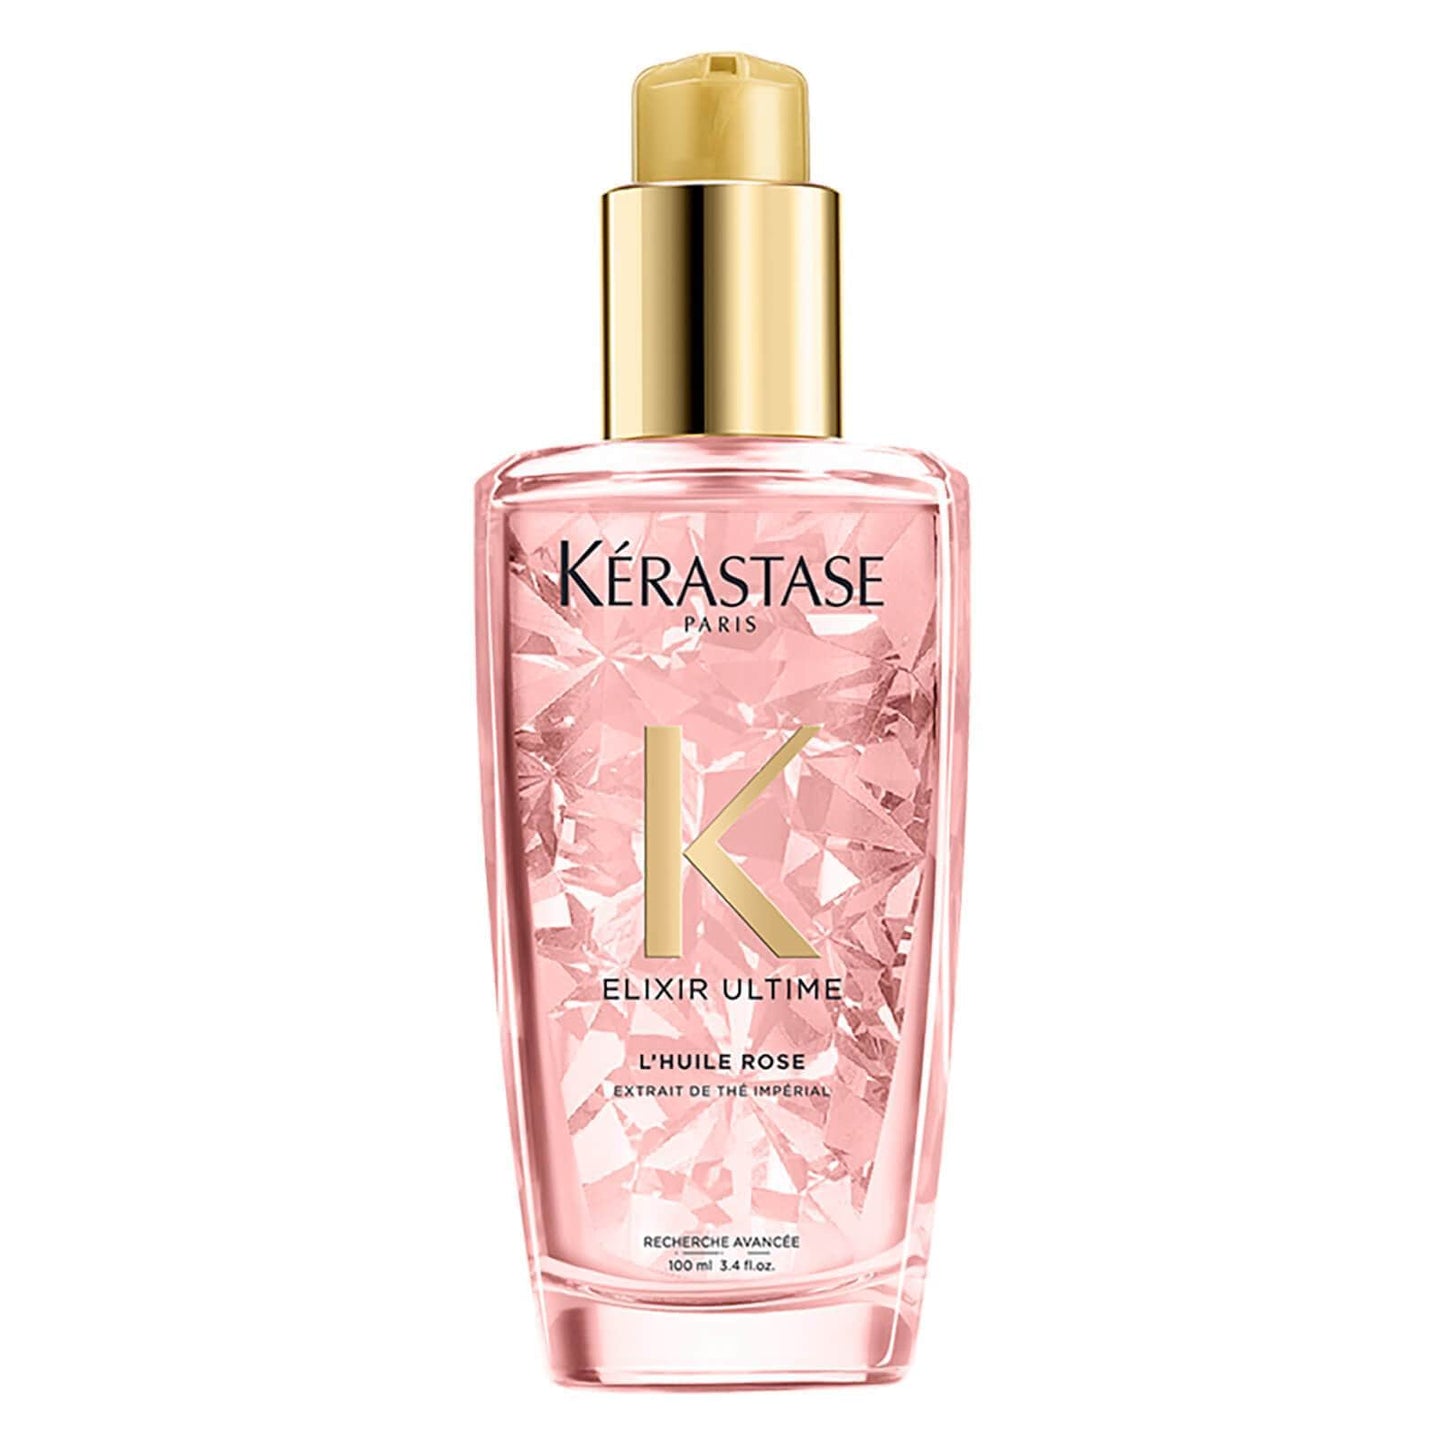 Kérastase - Hair oil with rose oil - Elixir Ultime - 100ml - Kérastase - Ethni Beauty Market